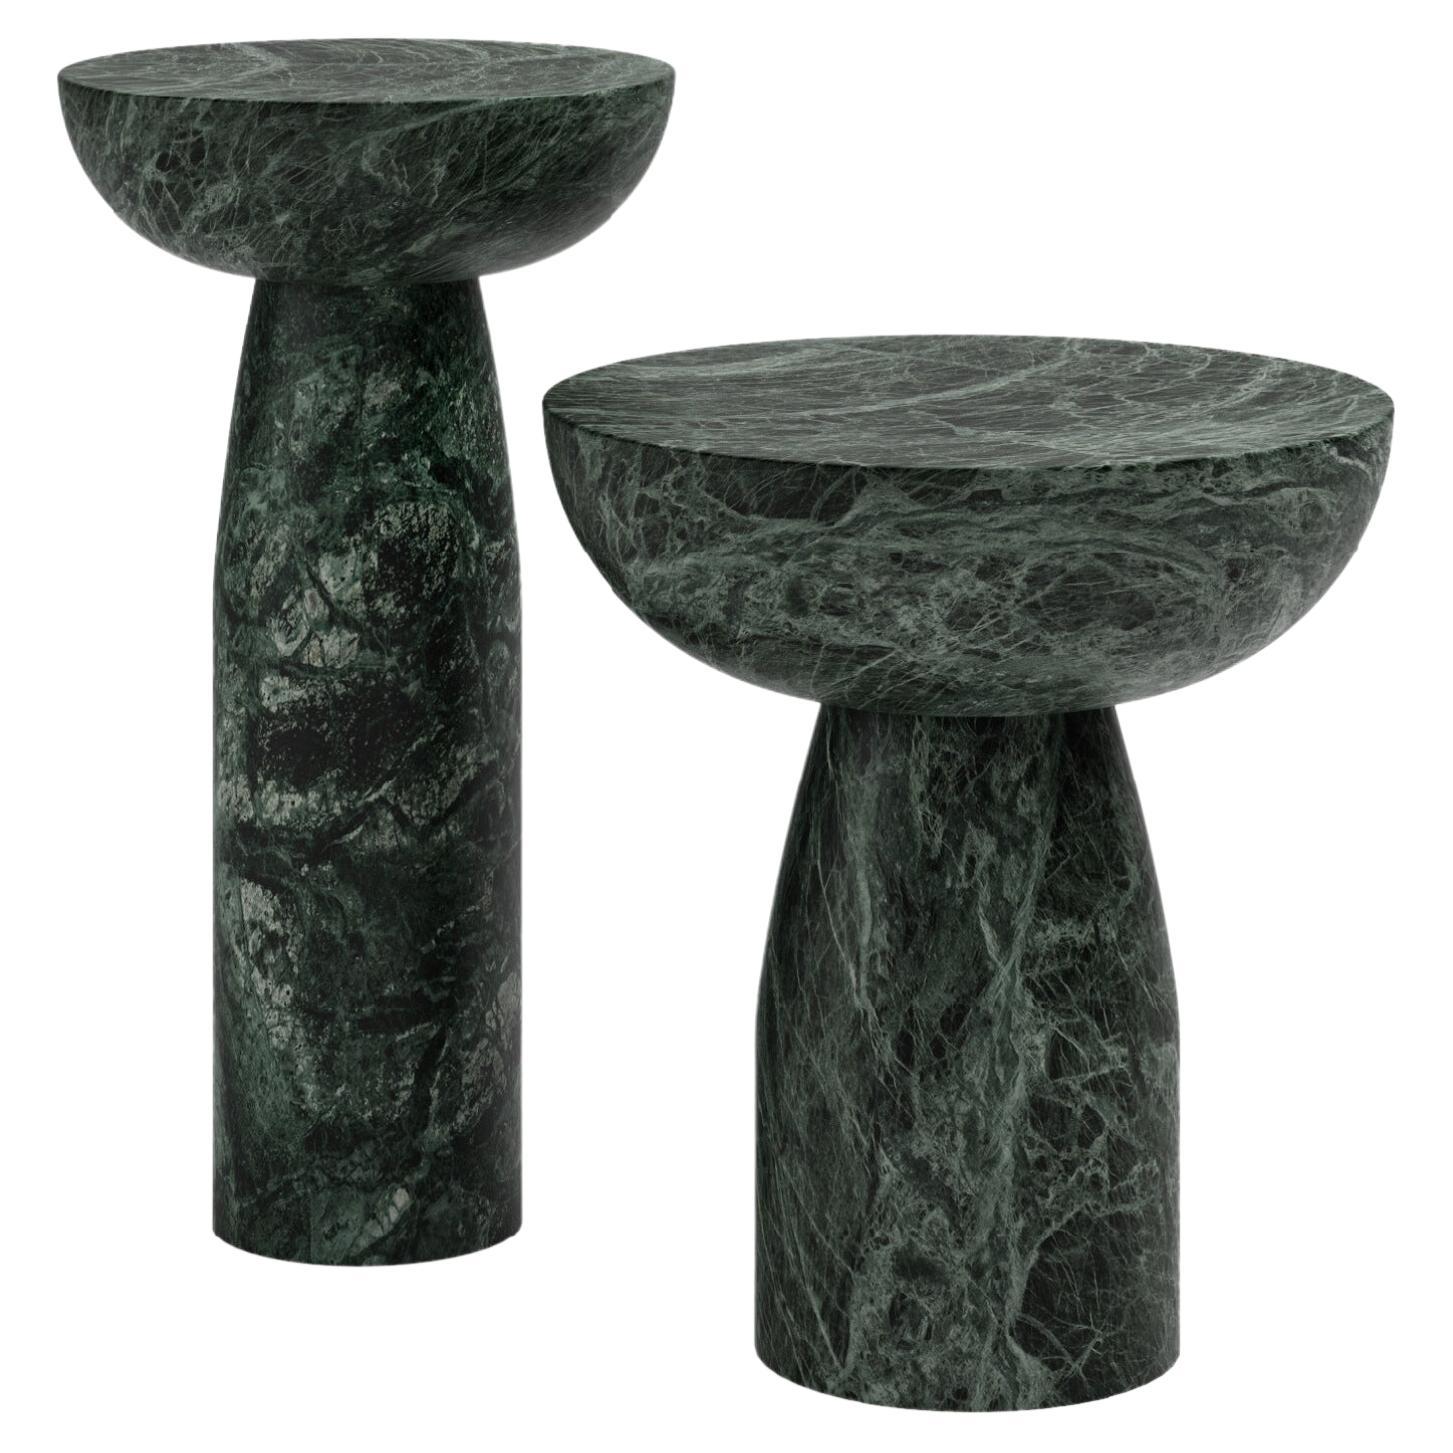 FORM(LA) Sfera Round Side Table 18”L x 18”W x 20”H Verde Guatemala Marble For Sale